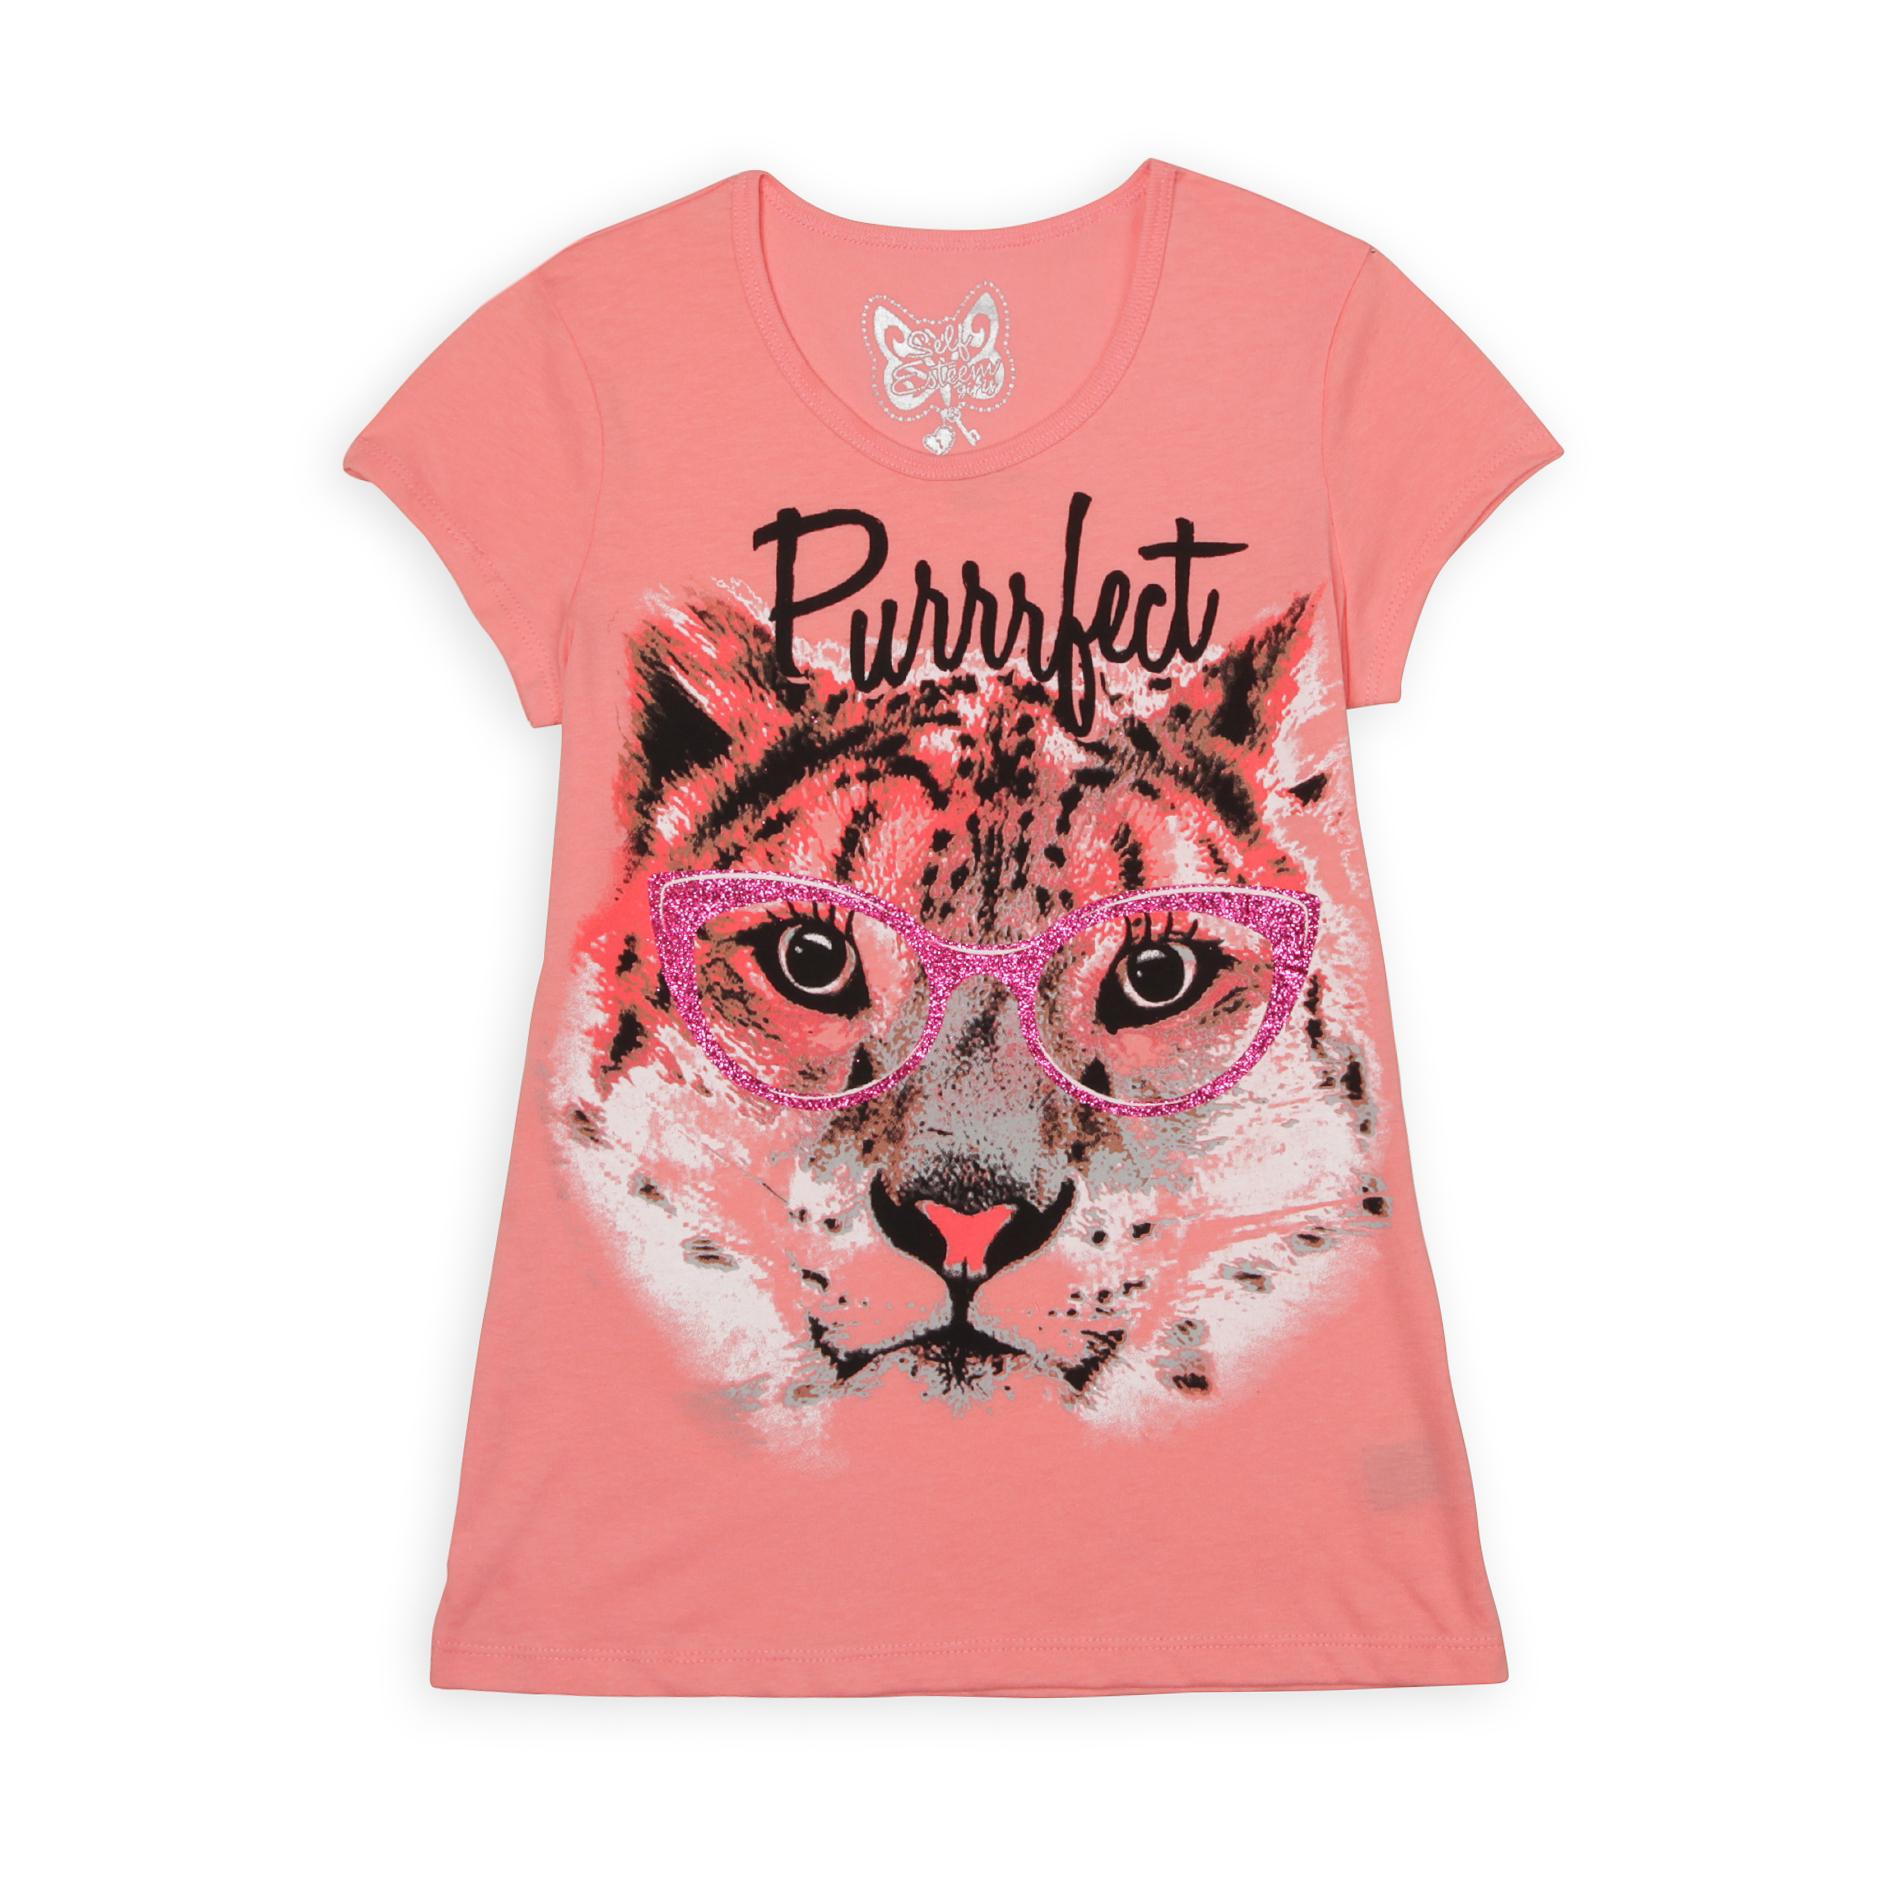 Self Esteem Girl's Graphic T-Shirt - Tiger